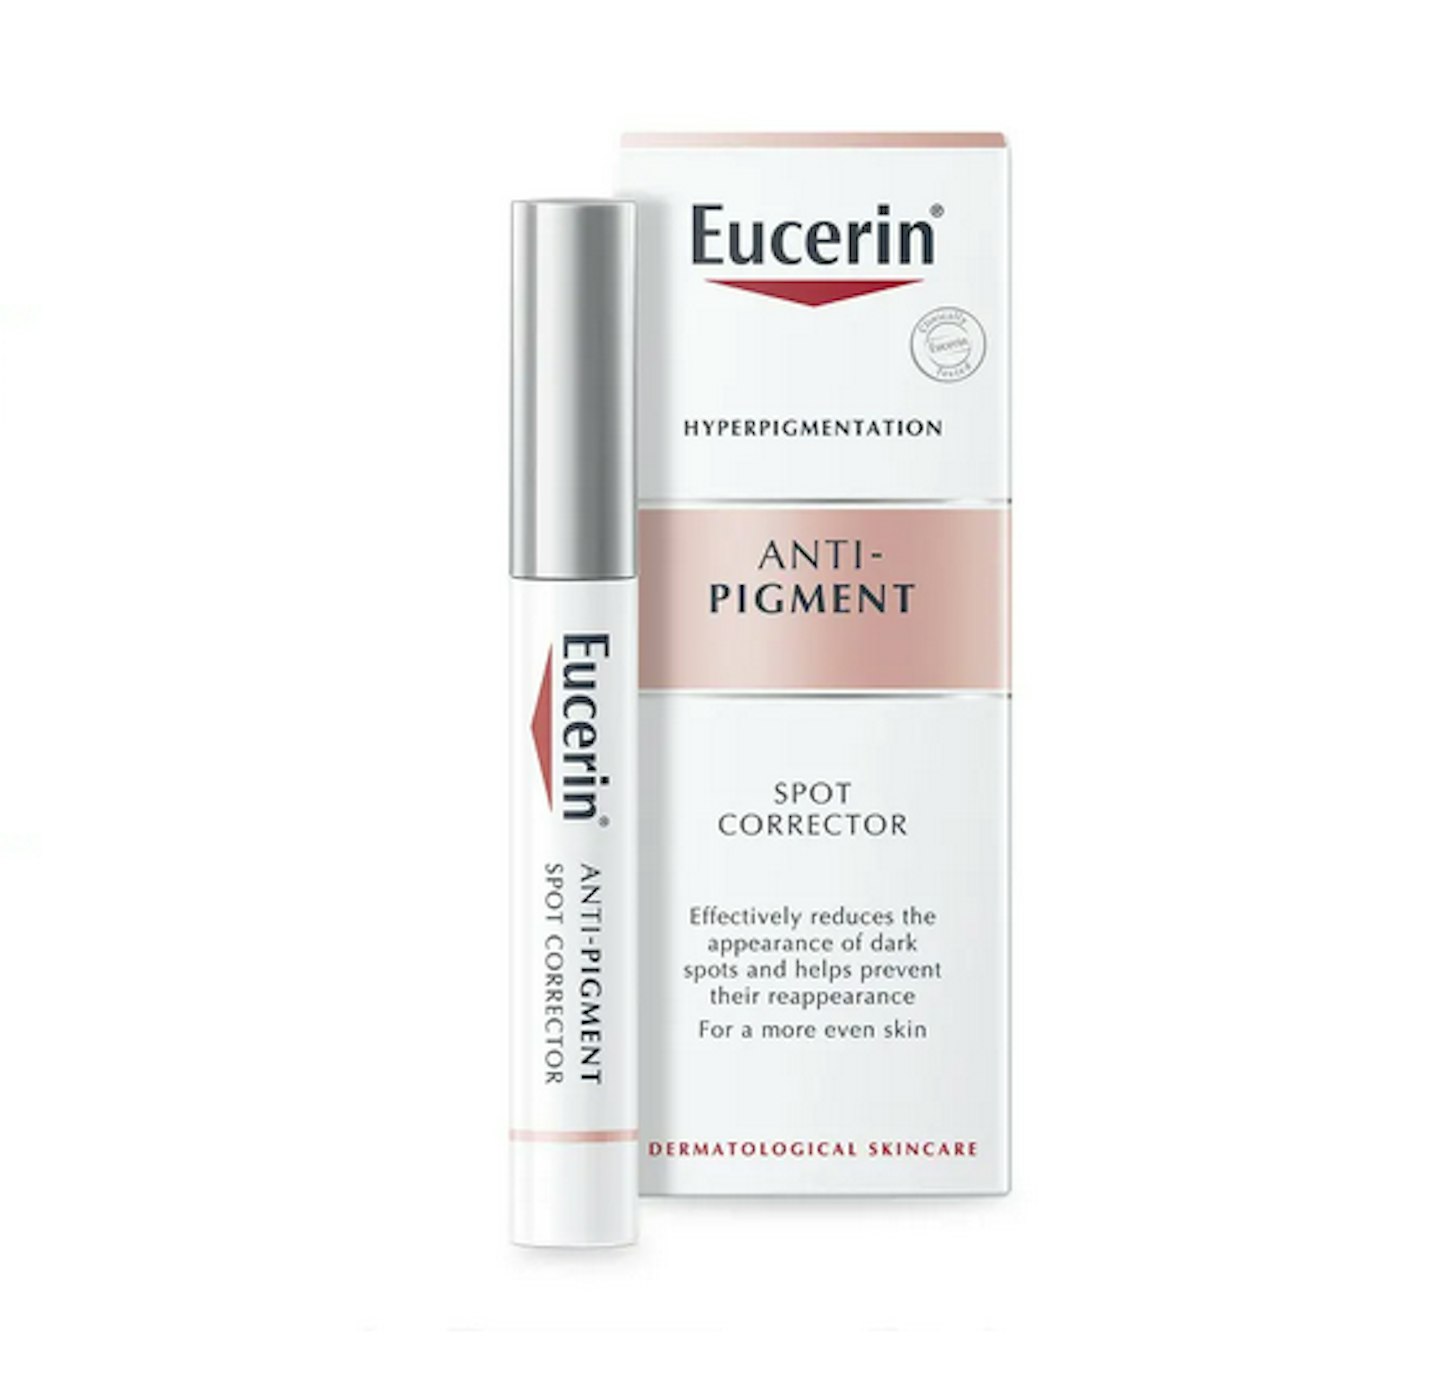 Eucerin Anti-Pigment Spot Corrector, £16